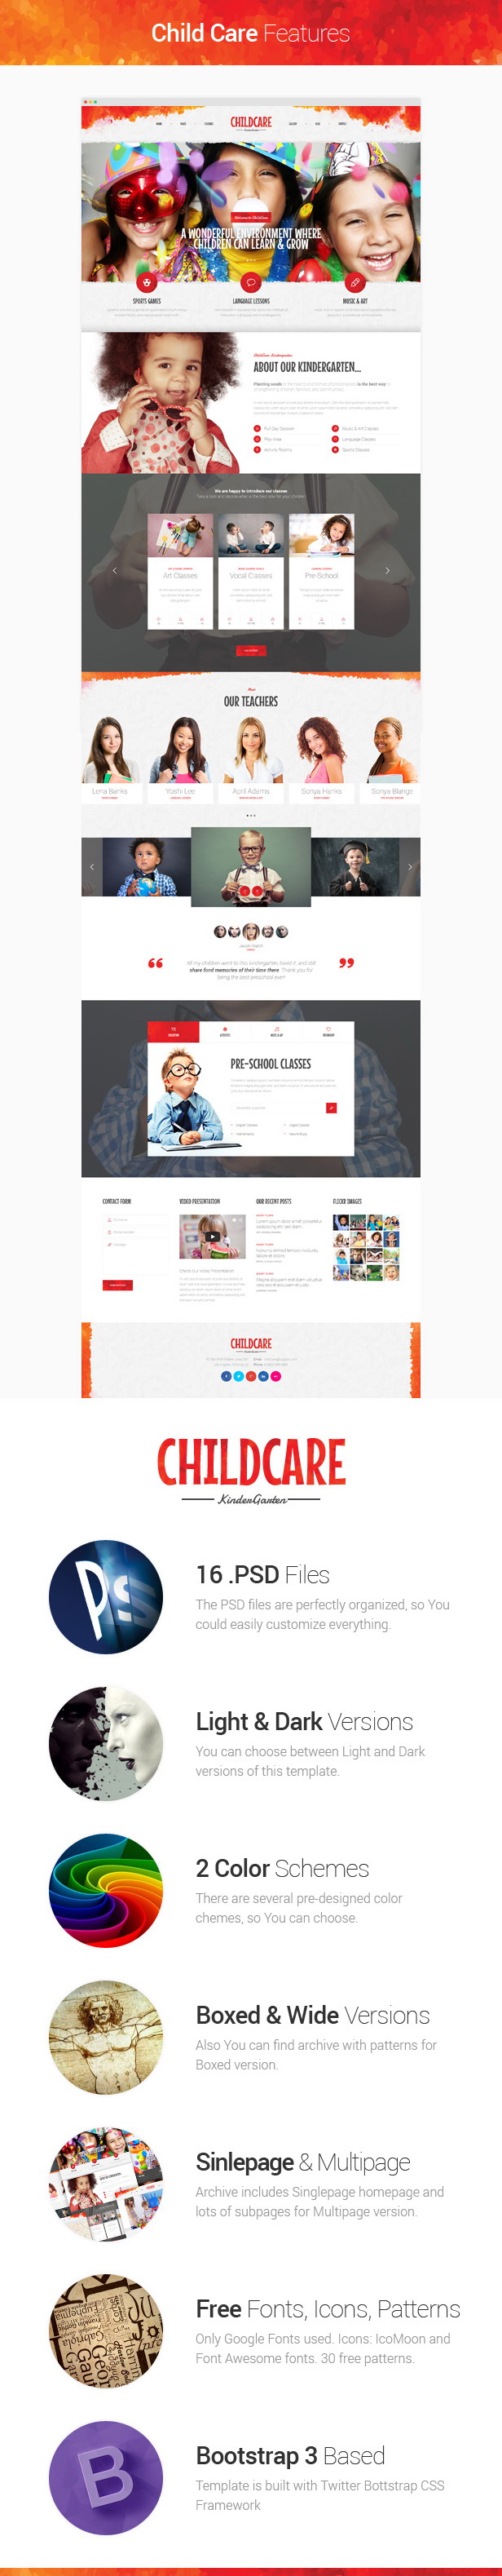 Child Care - Children & Kindergarten Template description